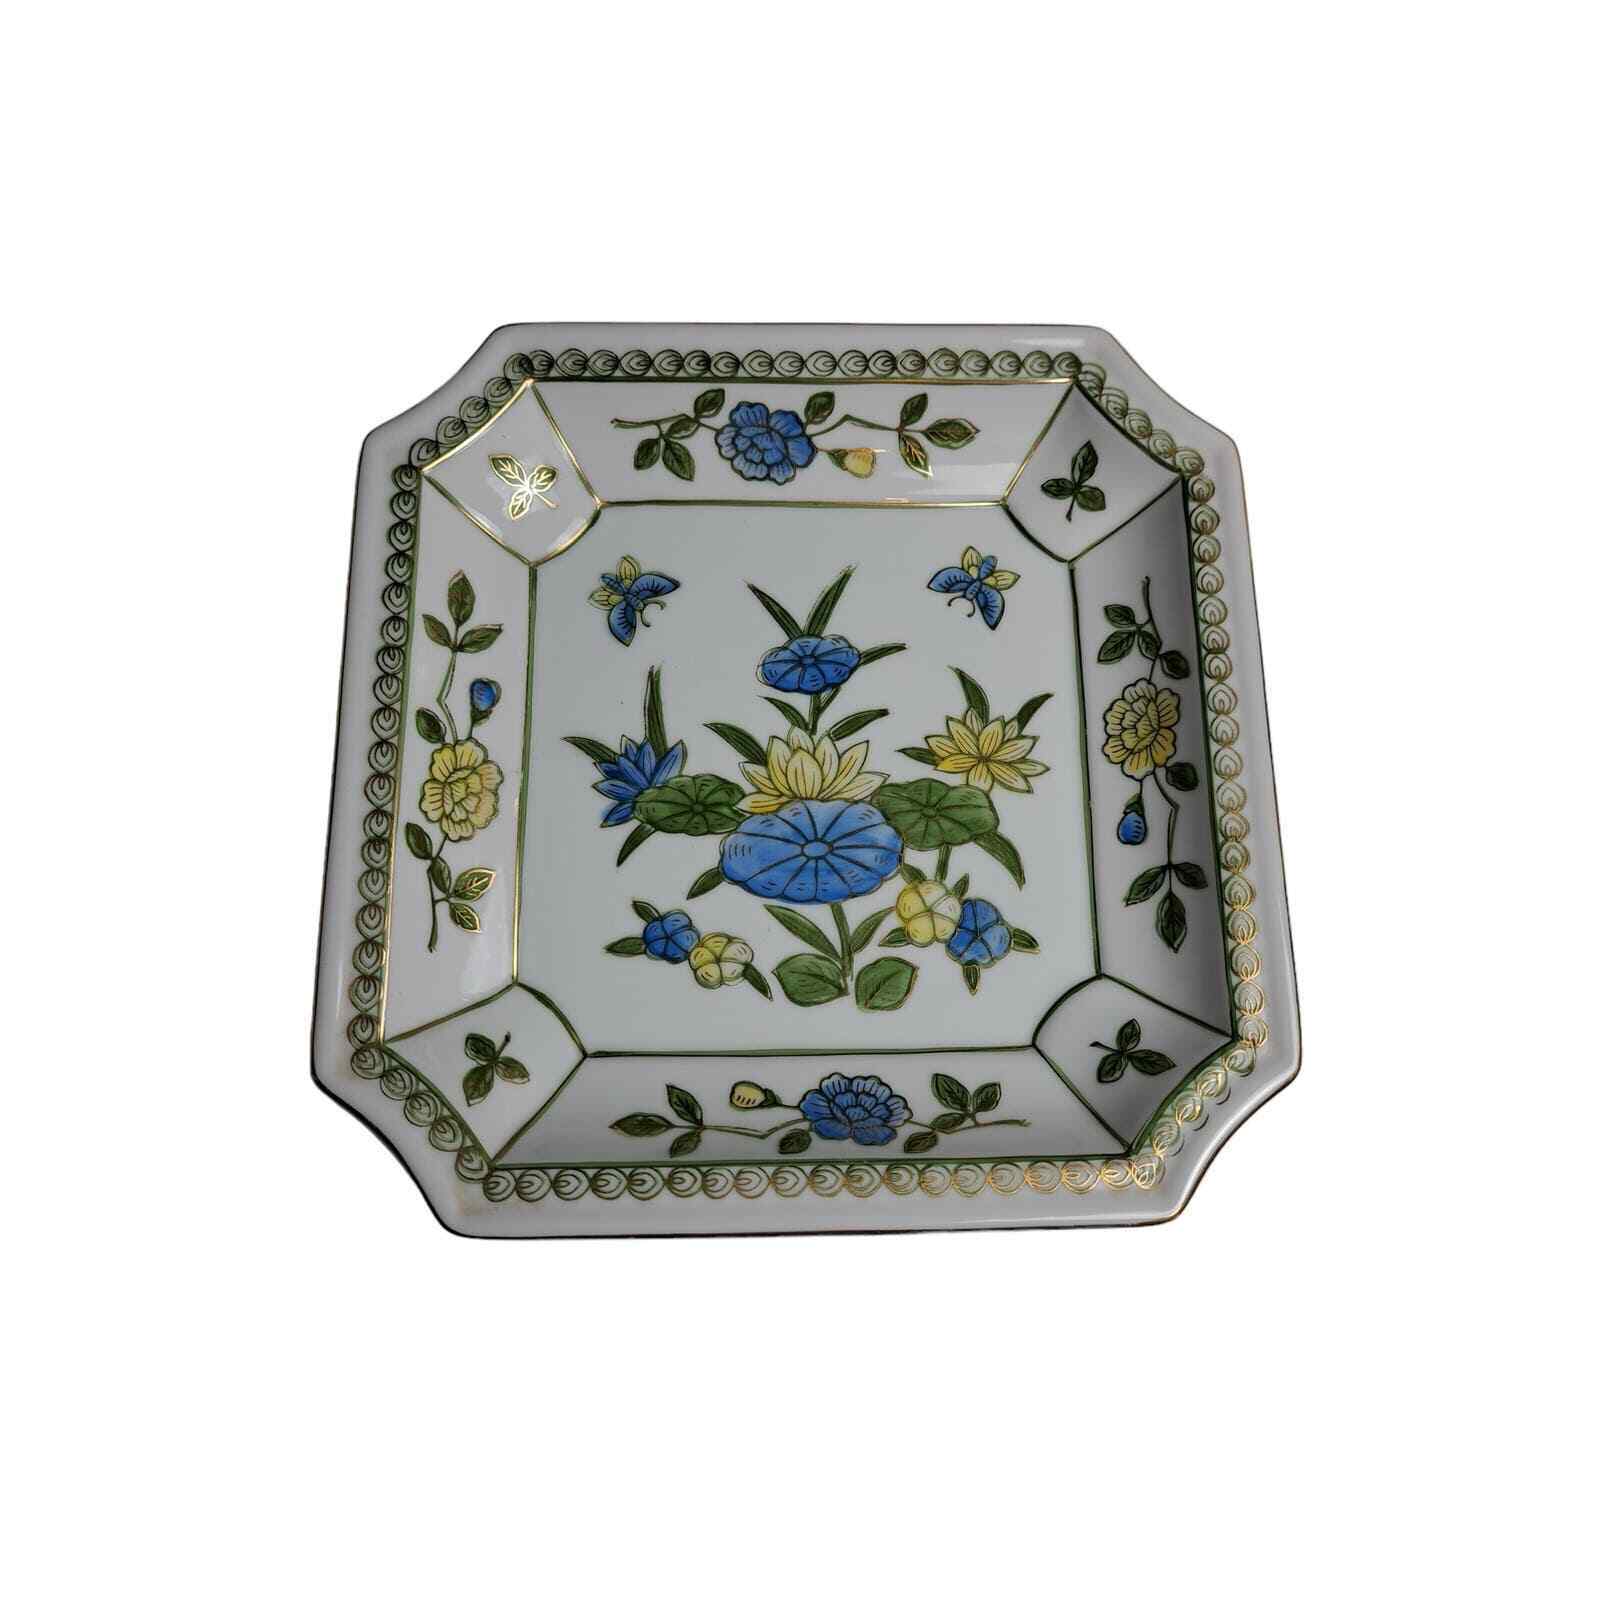 Andrea By Sadak Square Plate # 9001 Green Blue & Gold Florals MCM Contemporary